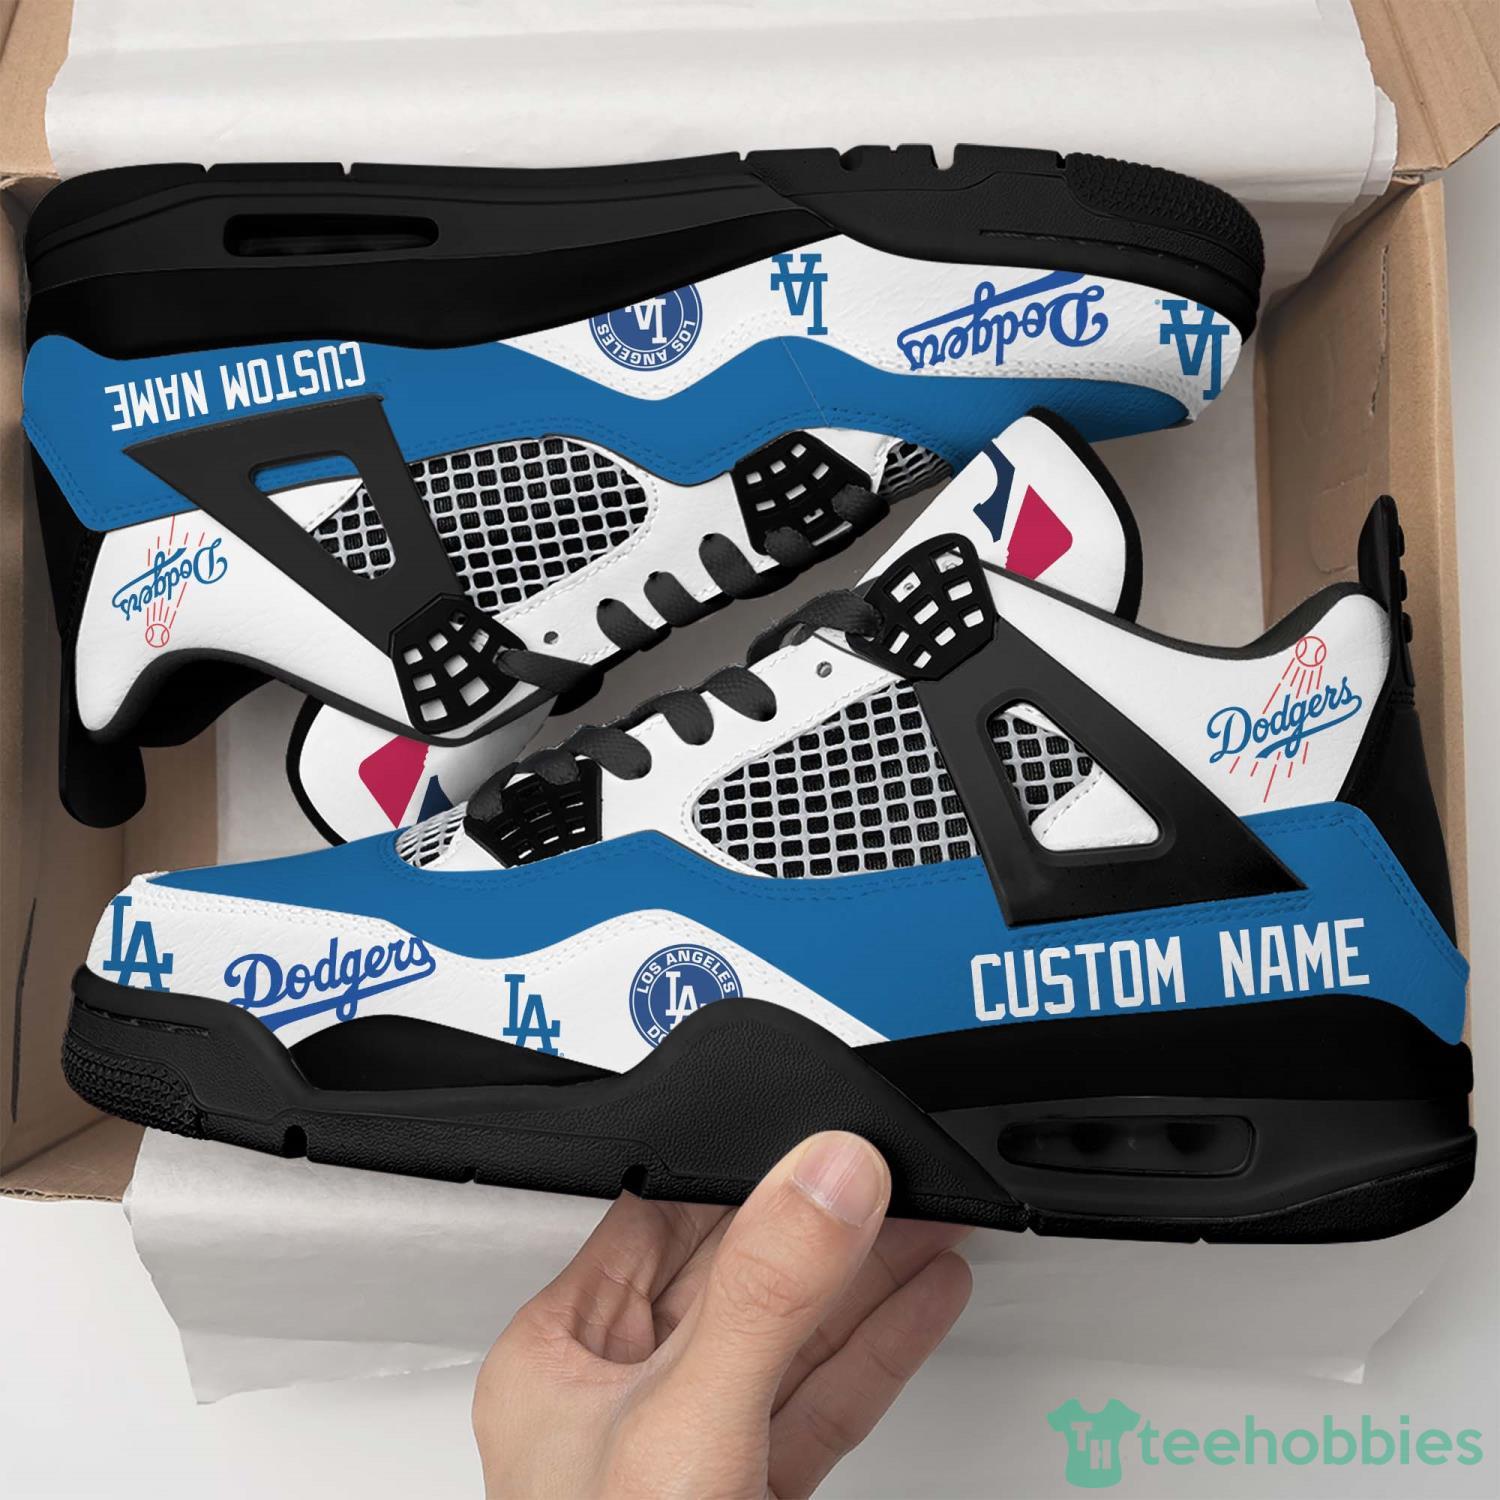 Los Angeles Dodgers Custom Shoes Limited Edition AJ 11 MLB Air